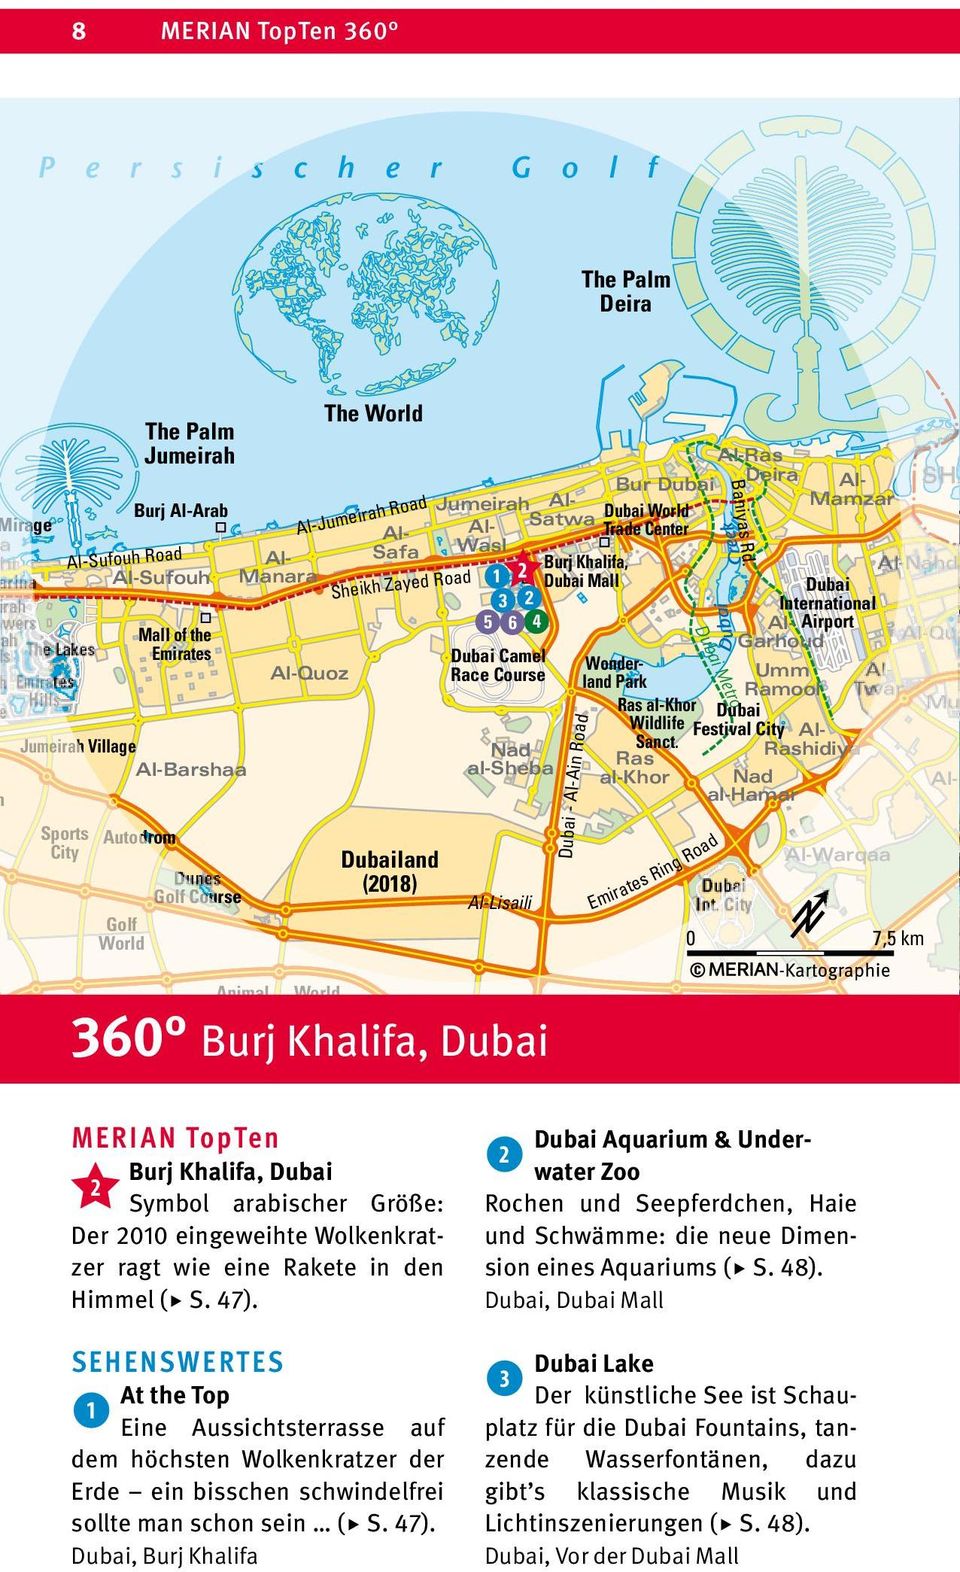 Nad al-sheba Al-Lisaili Burj Khalifa, Dubai Mall Dubai - Al-Ain Road Dubai World Trade Center Wonderland Park Ras al-khor Wildlife Sanct.